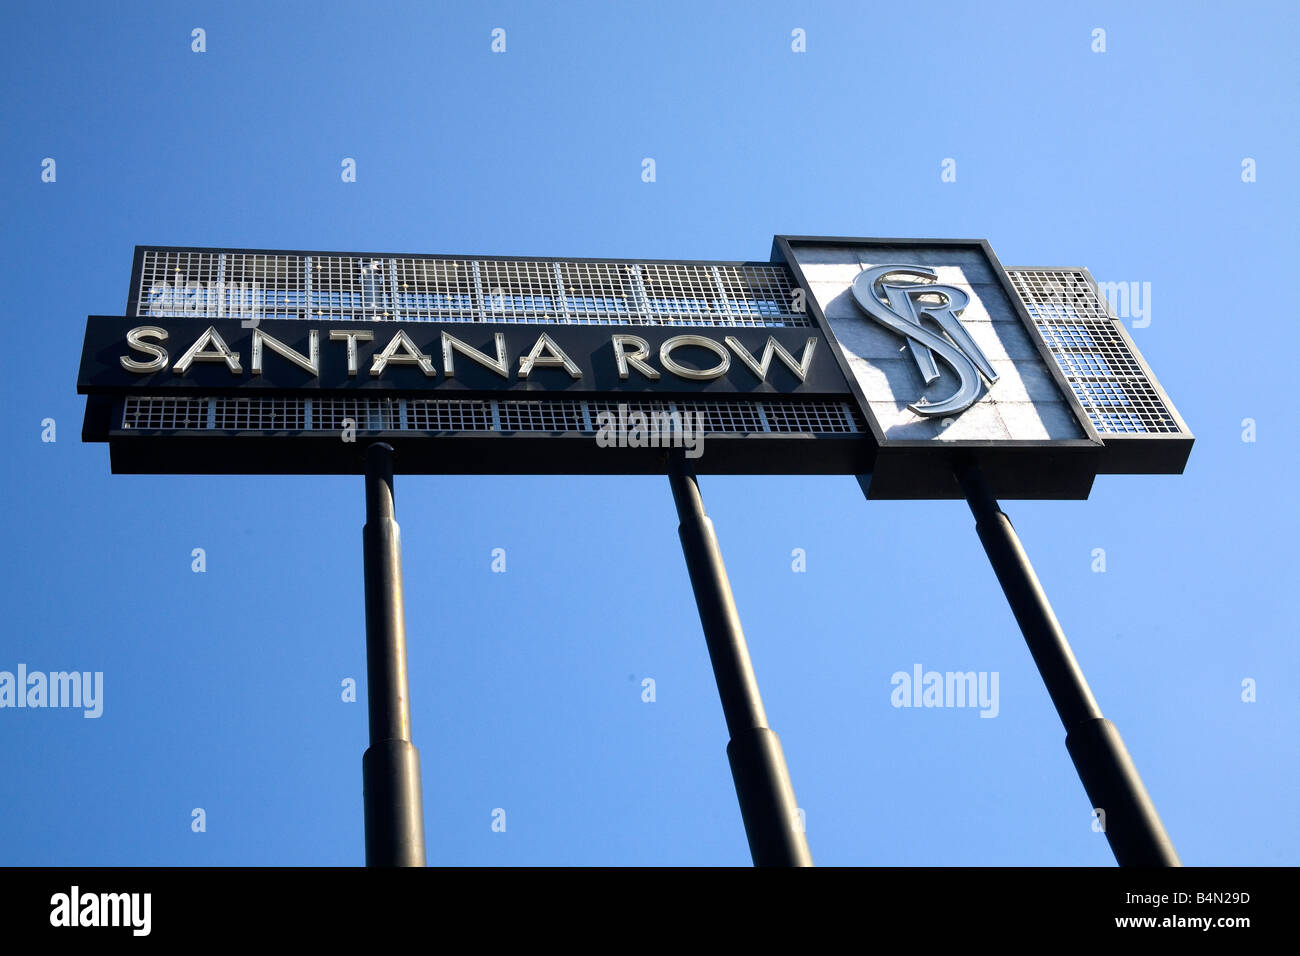 Santana row sign hi-res stock photography and images - Alamy